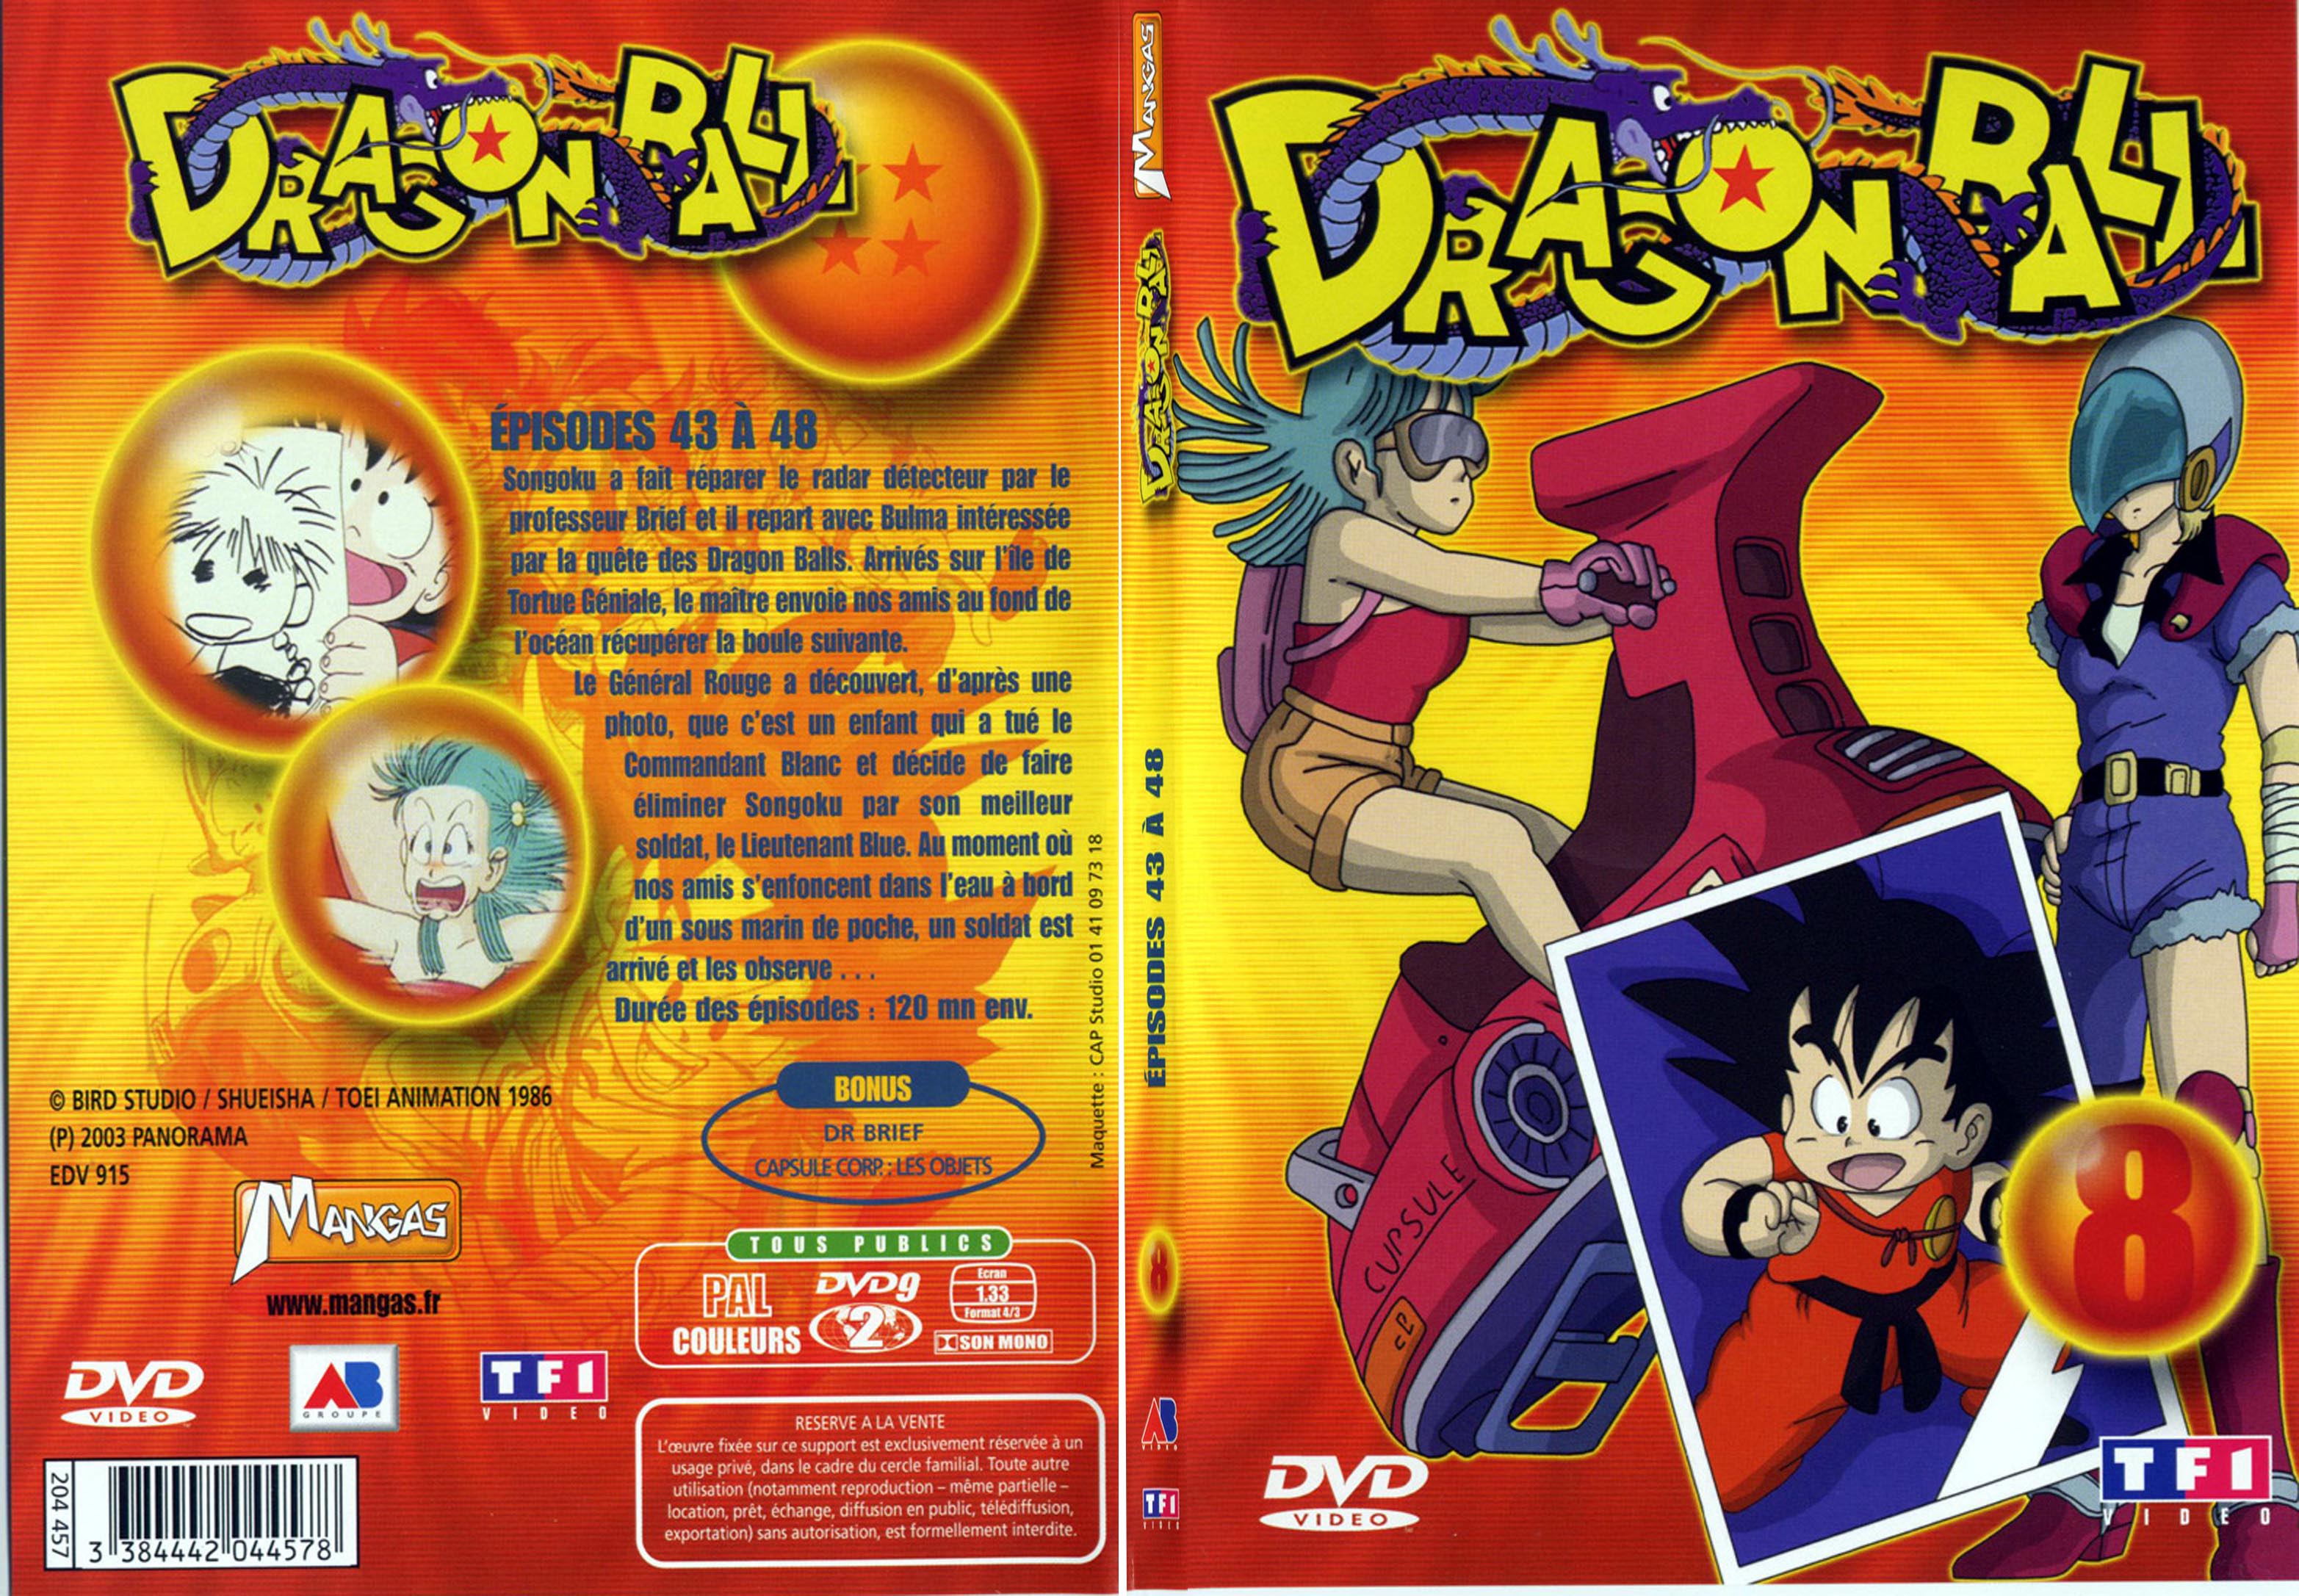 Jaquette DVD Dragon ball vol 8 - SLIM